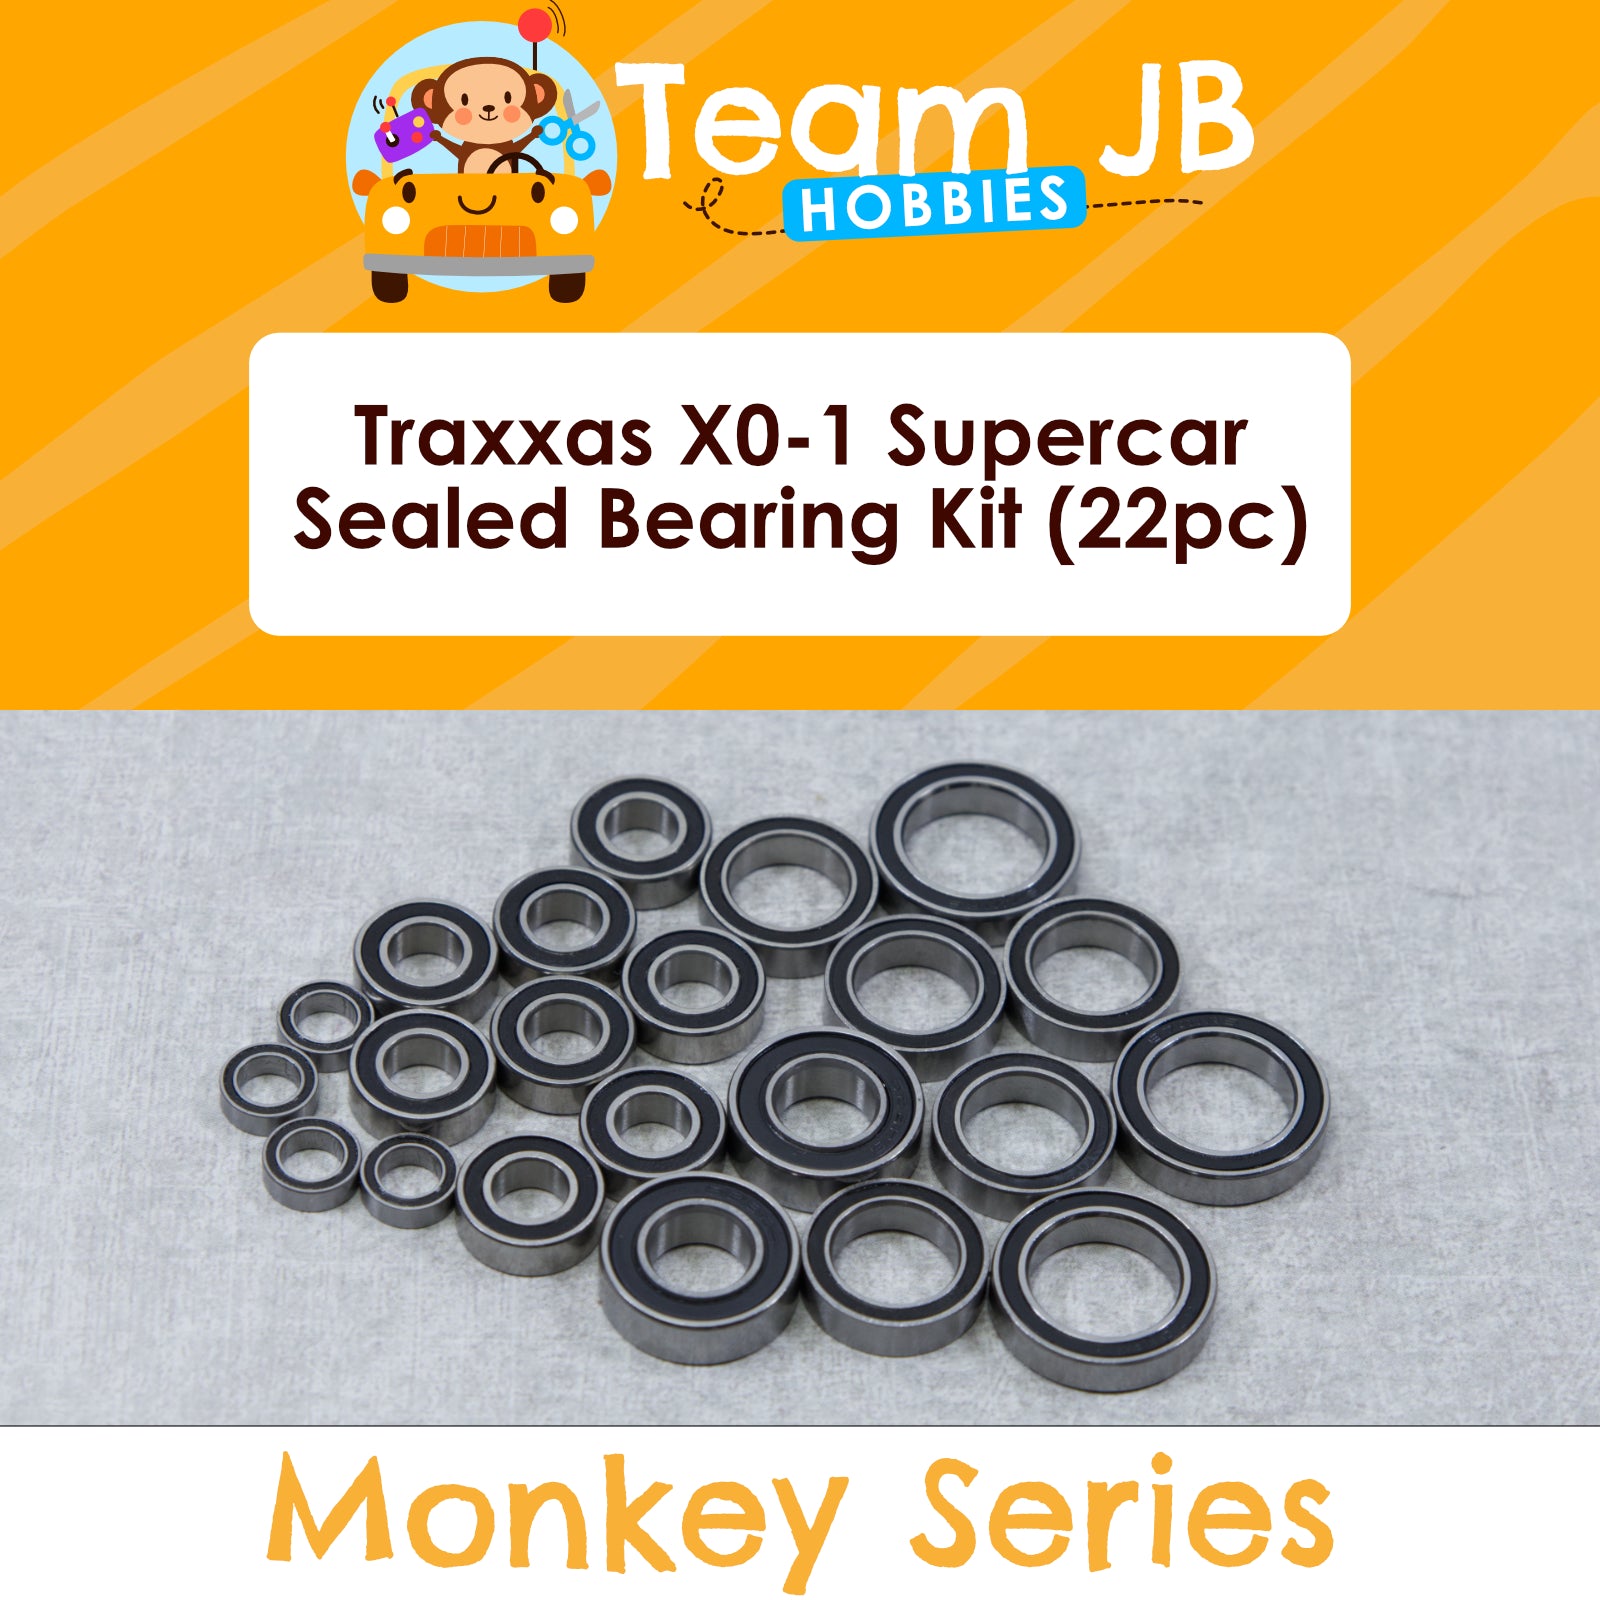 Traxxas X0-1 Supercar - Sealed Bearing Kit